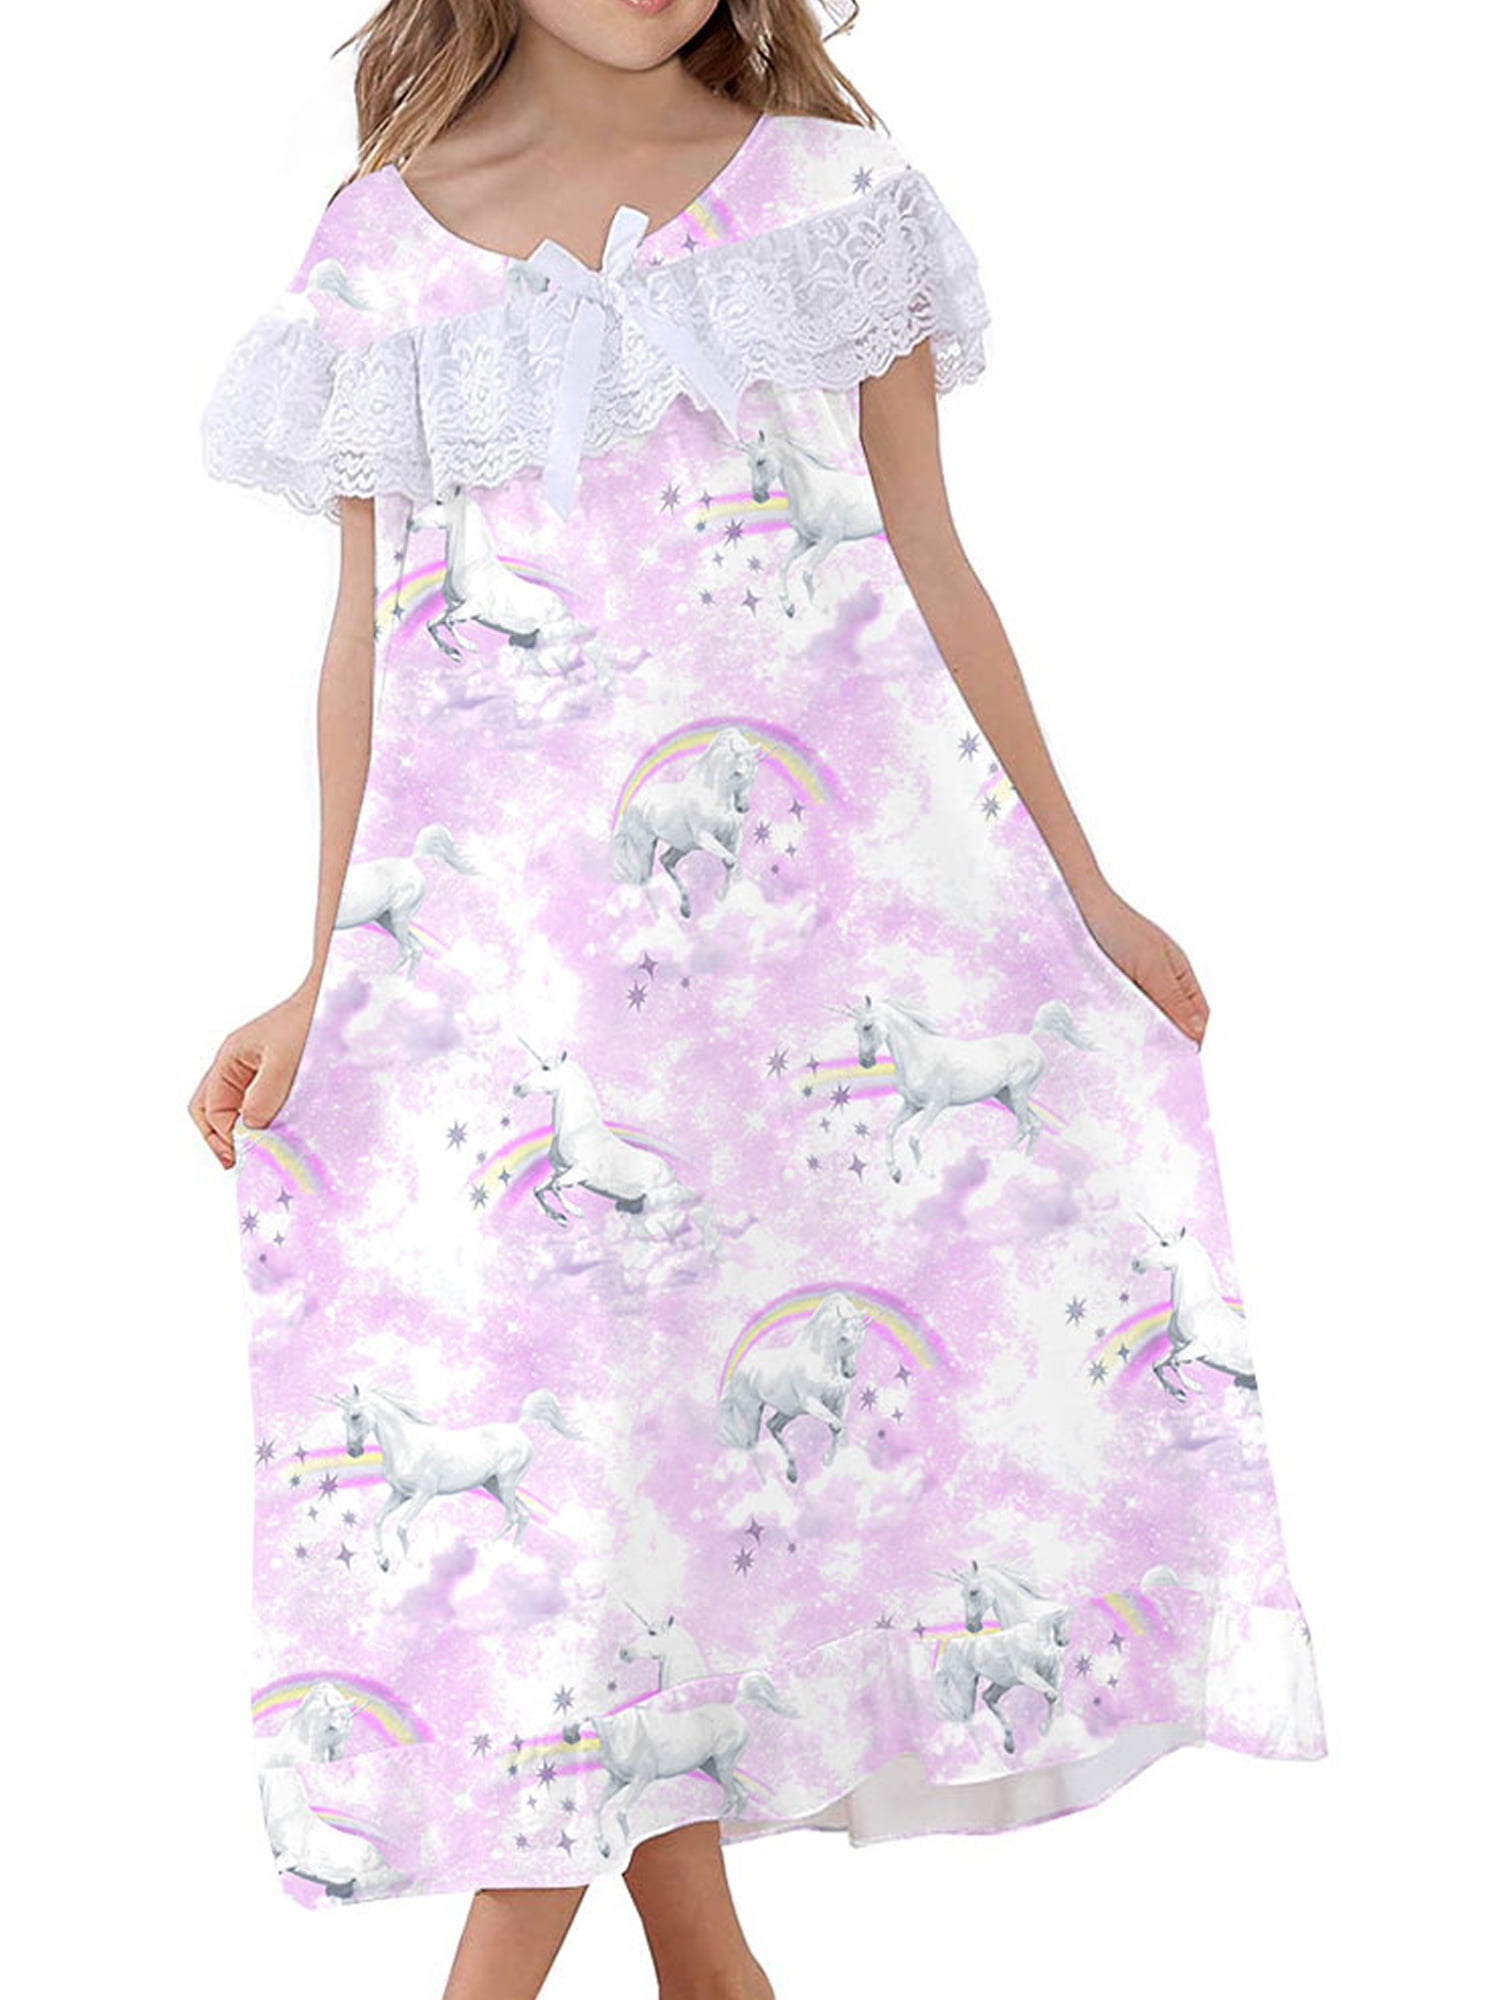 Girls Kids Cartoon Princess Pyjamas Nightie Nightdress Sleepwear Pjs Nightwear 